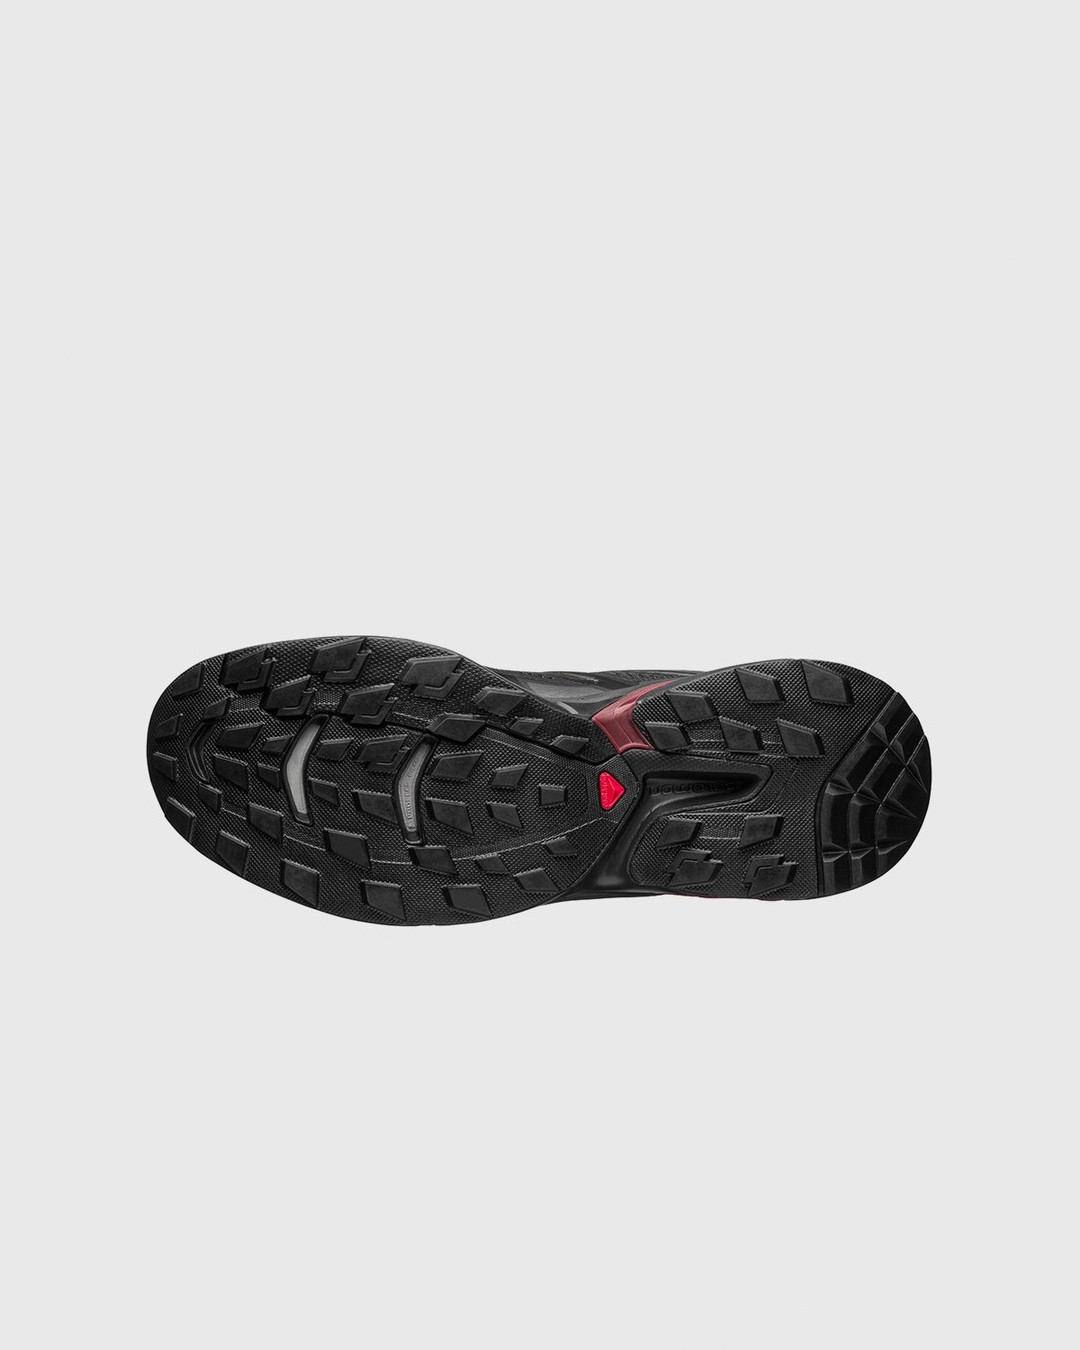 Salomon – XT-Wings 2 Advanced Black - Low Top Sneakers - Black - Image 5